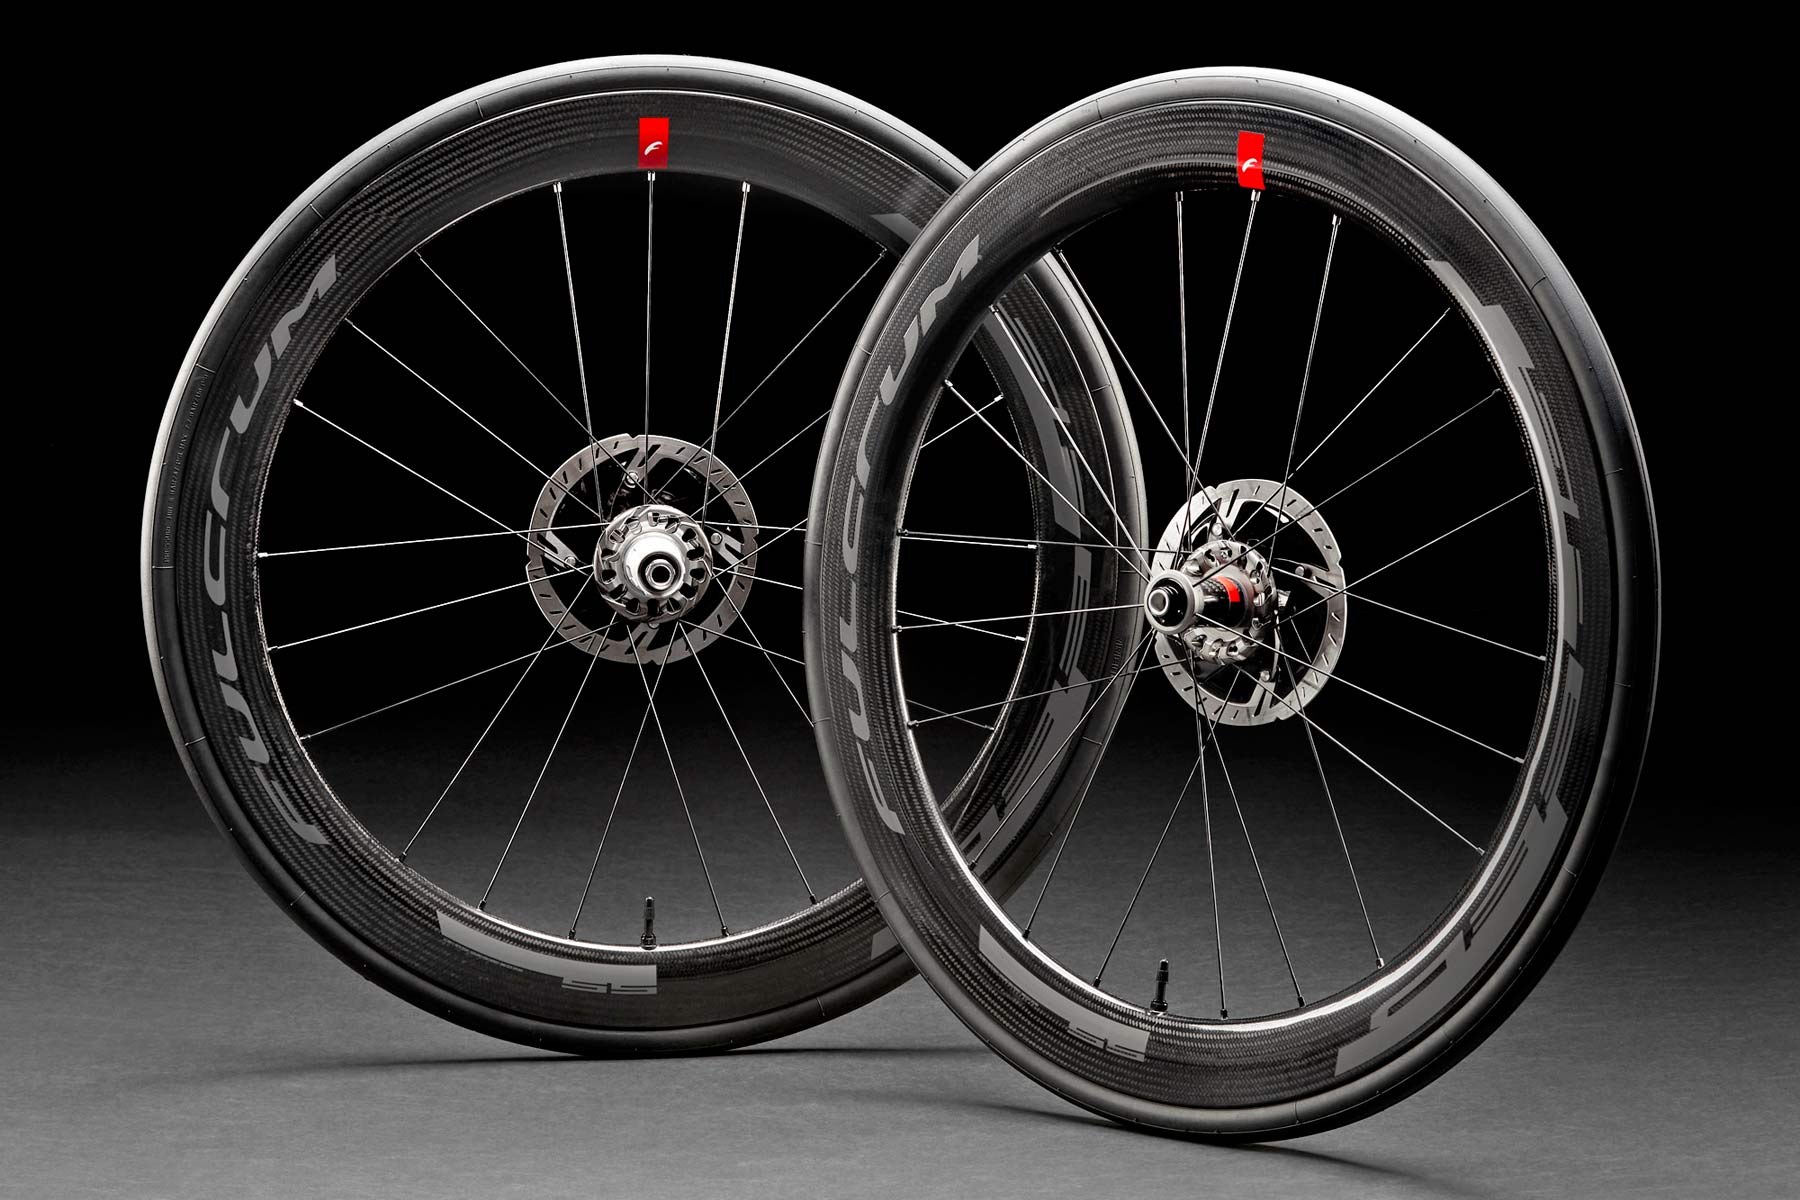 2020 Fulcrum Speed 55 DB aero carbon road wheels,55mm mid depth aerodynamic 2 way fit carbon tubeless disc brake road bike race wheelset